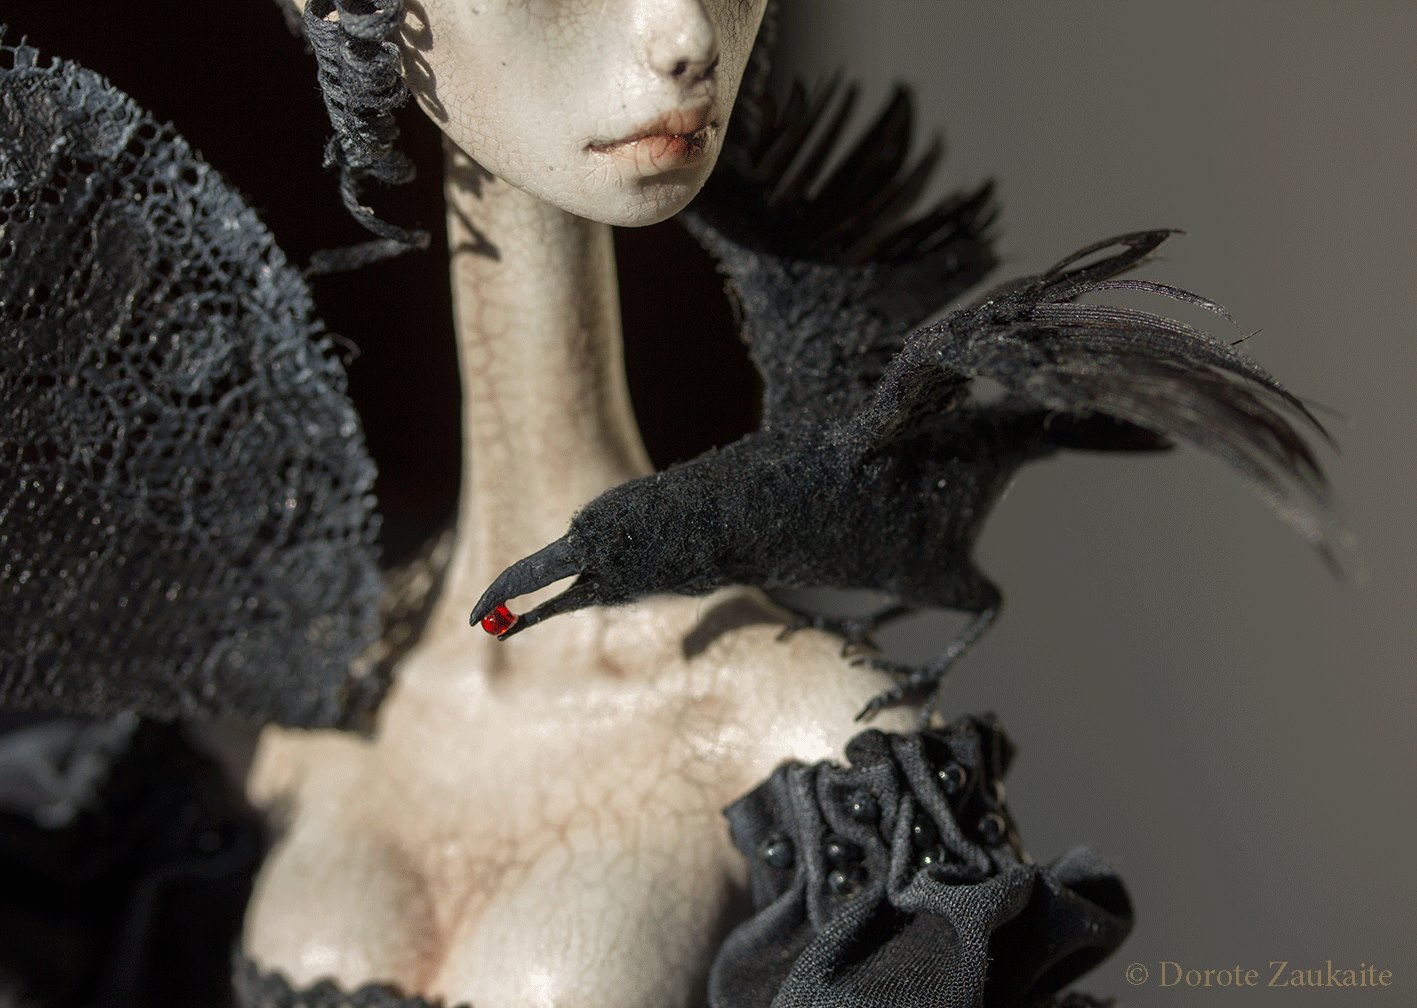 Dorote Zaukaite – Beautiful dolls mixed media art – Winter is coming